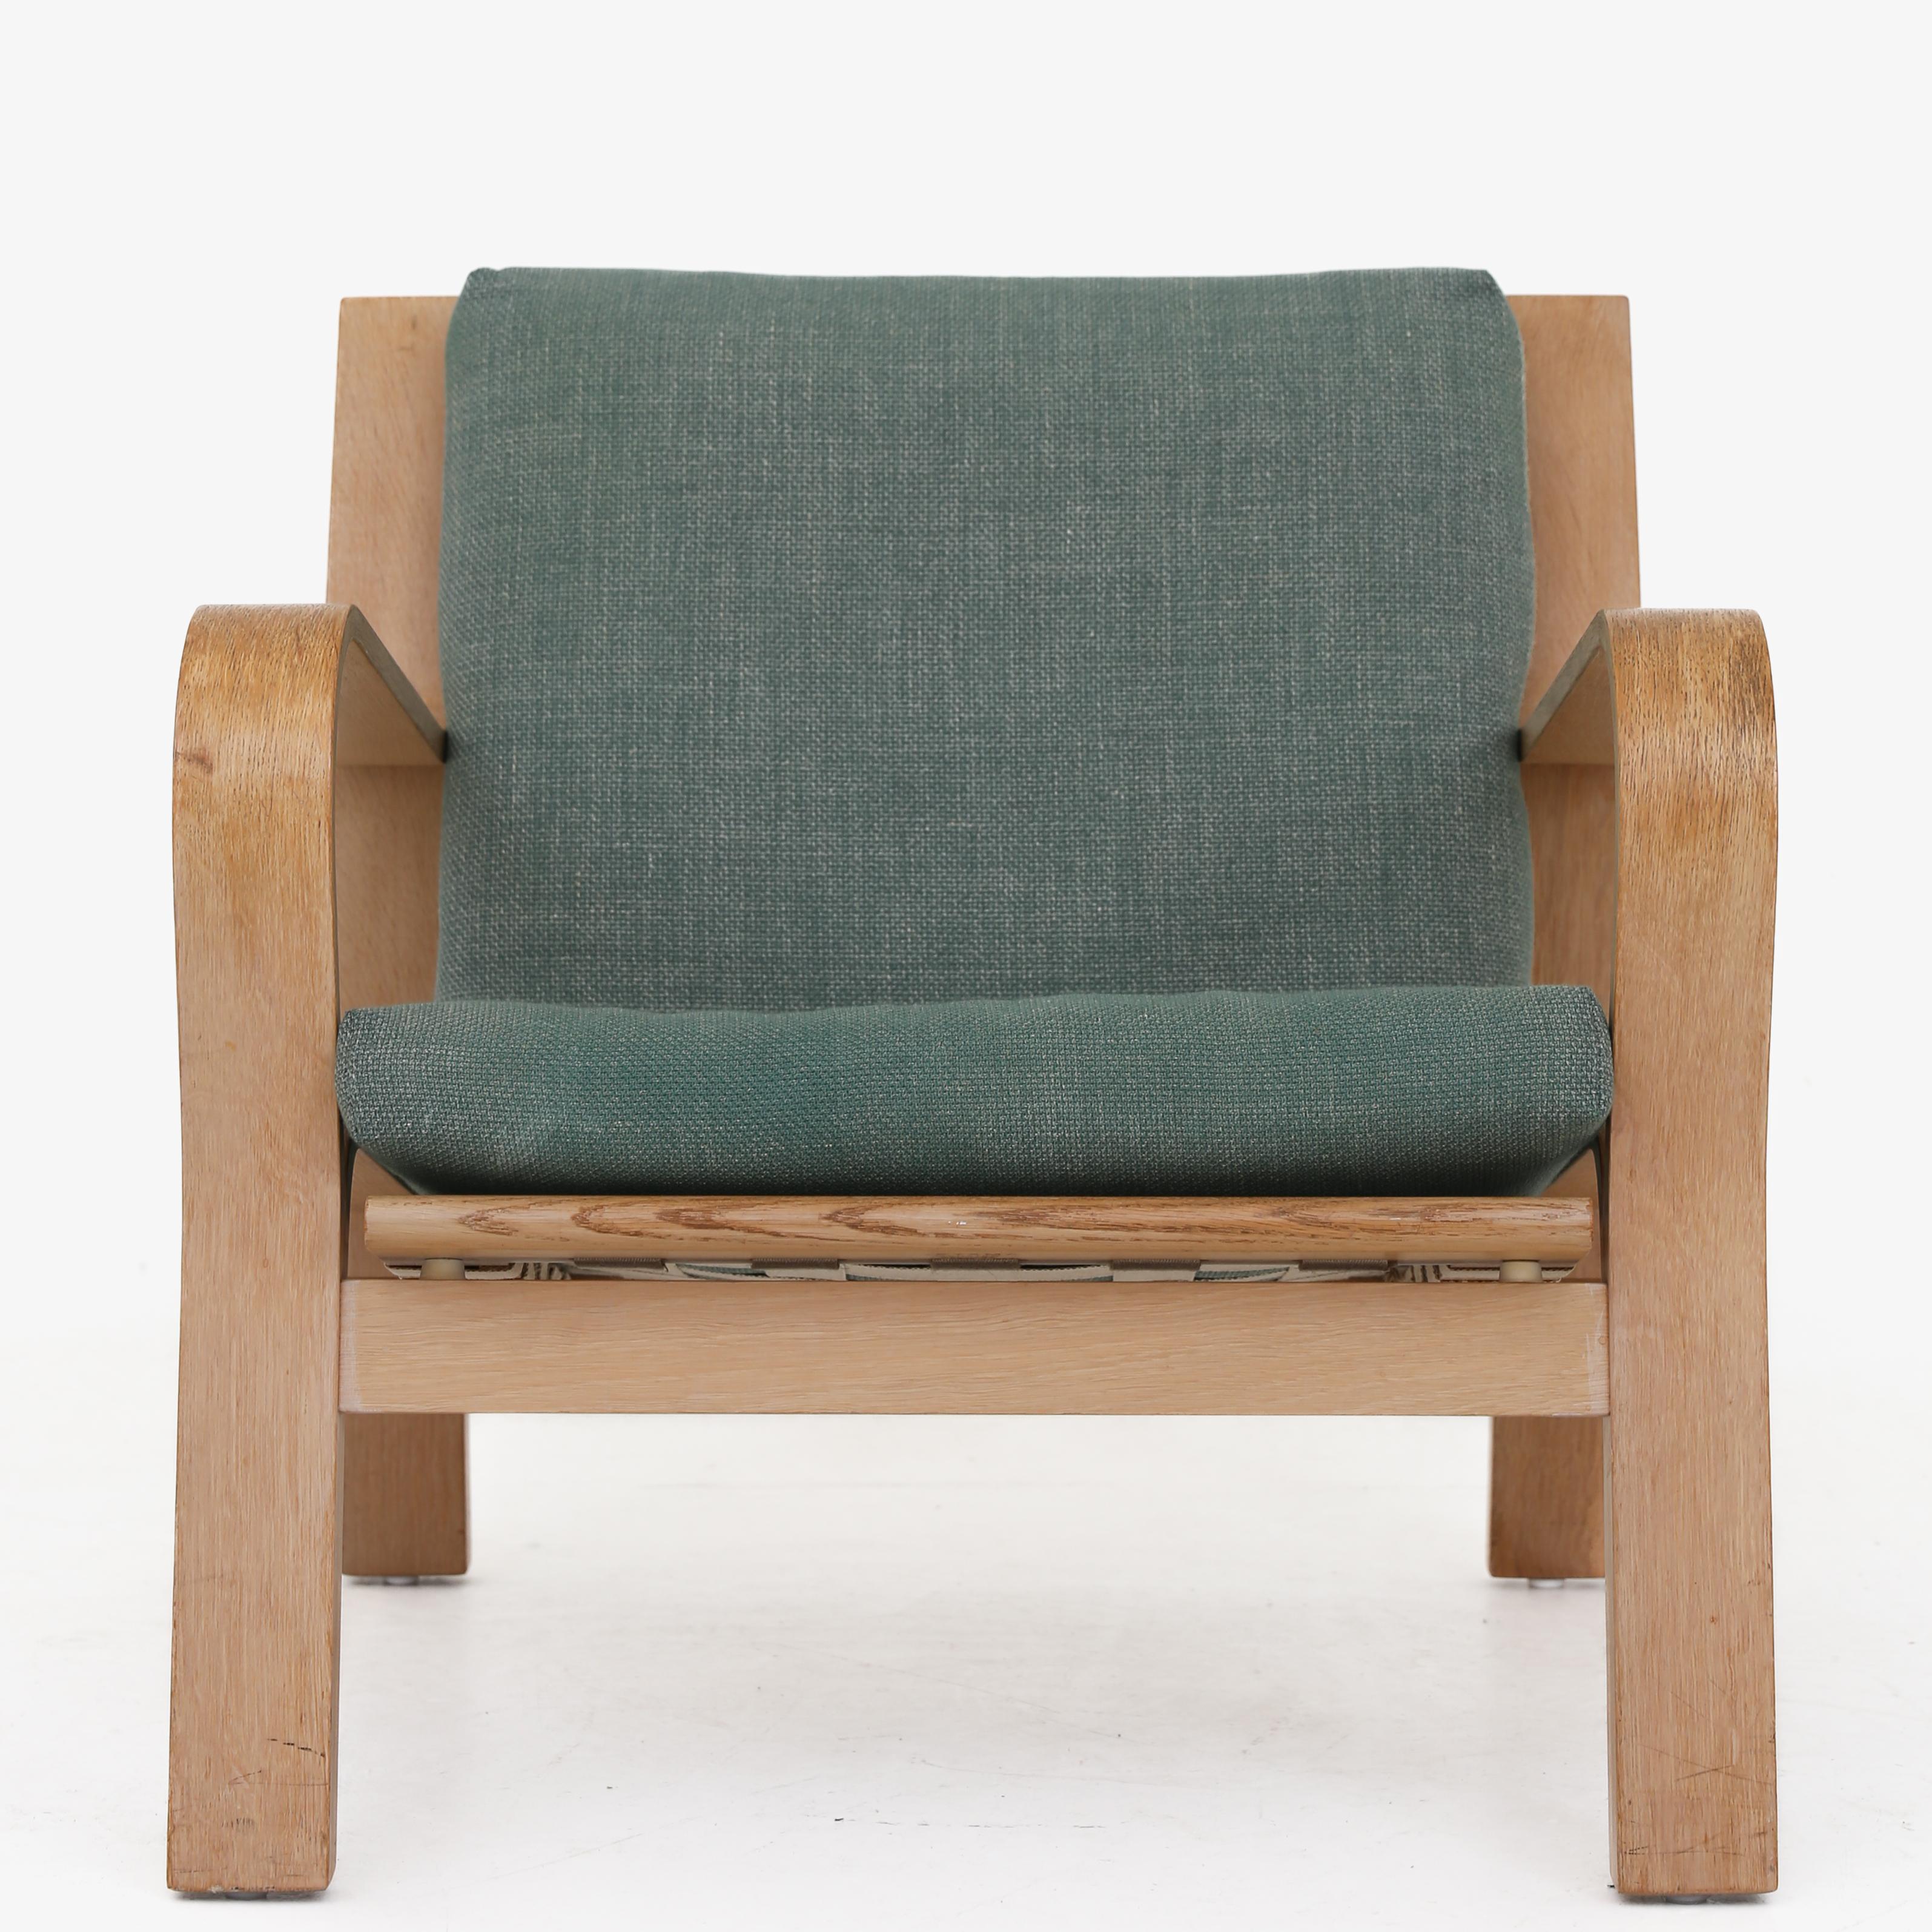 Pair of GE 671 - Easy chairs in patinated oak and cushion in green wool. Hans J. Wegner / Getama